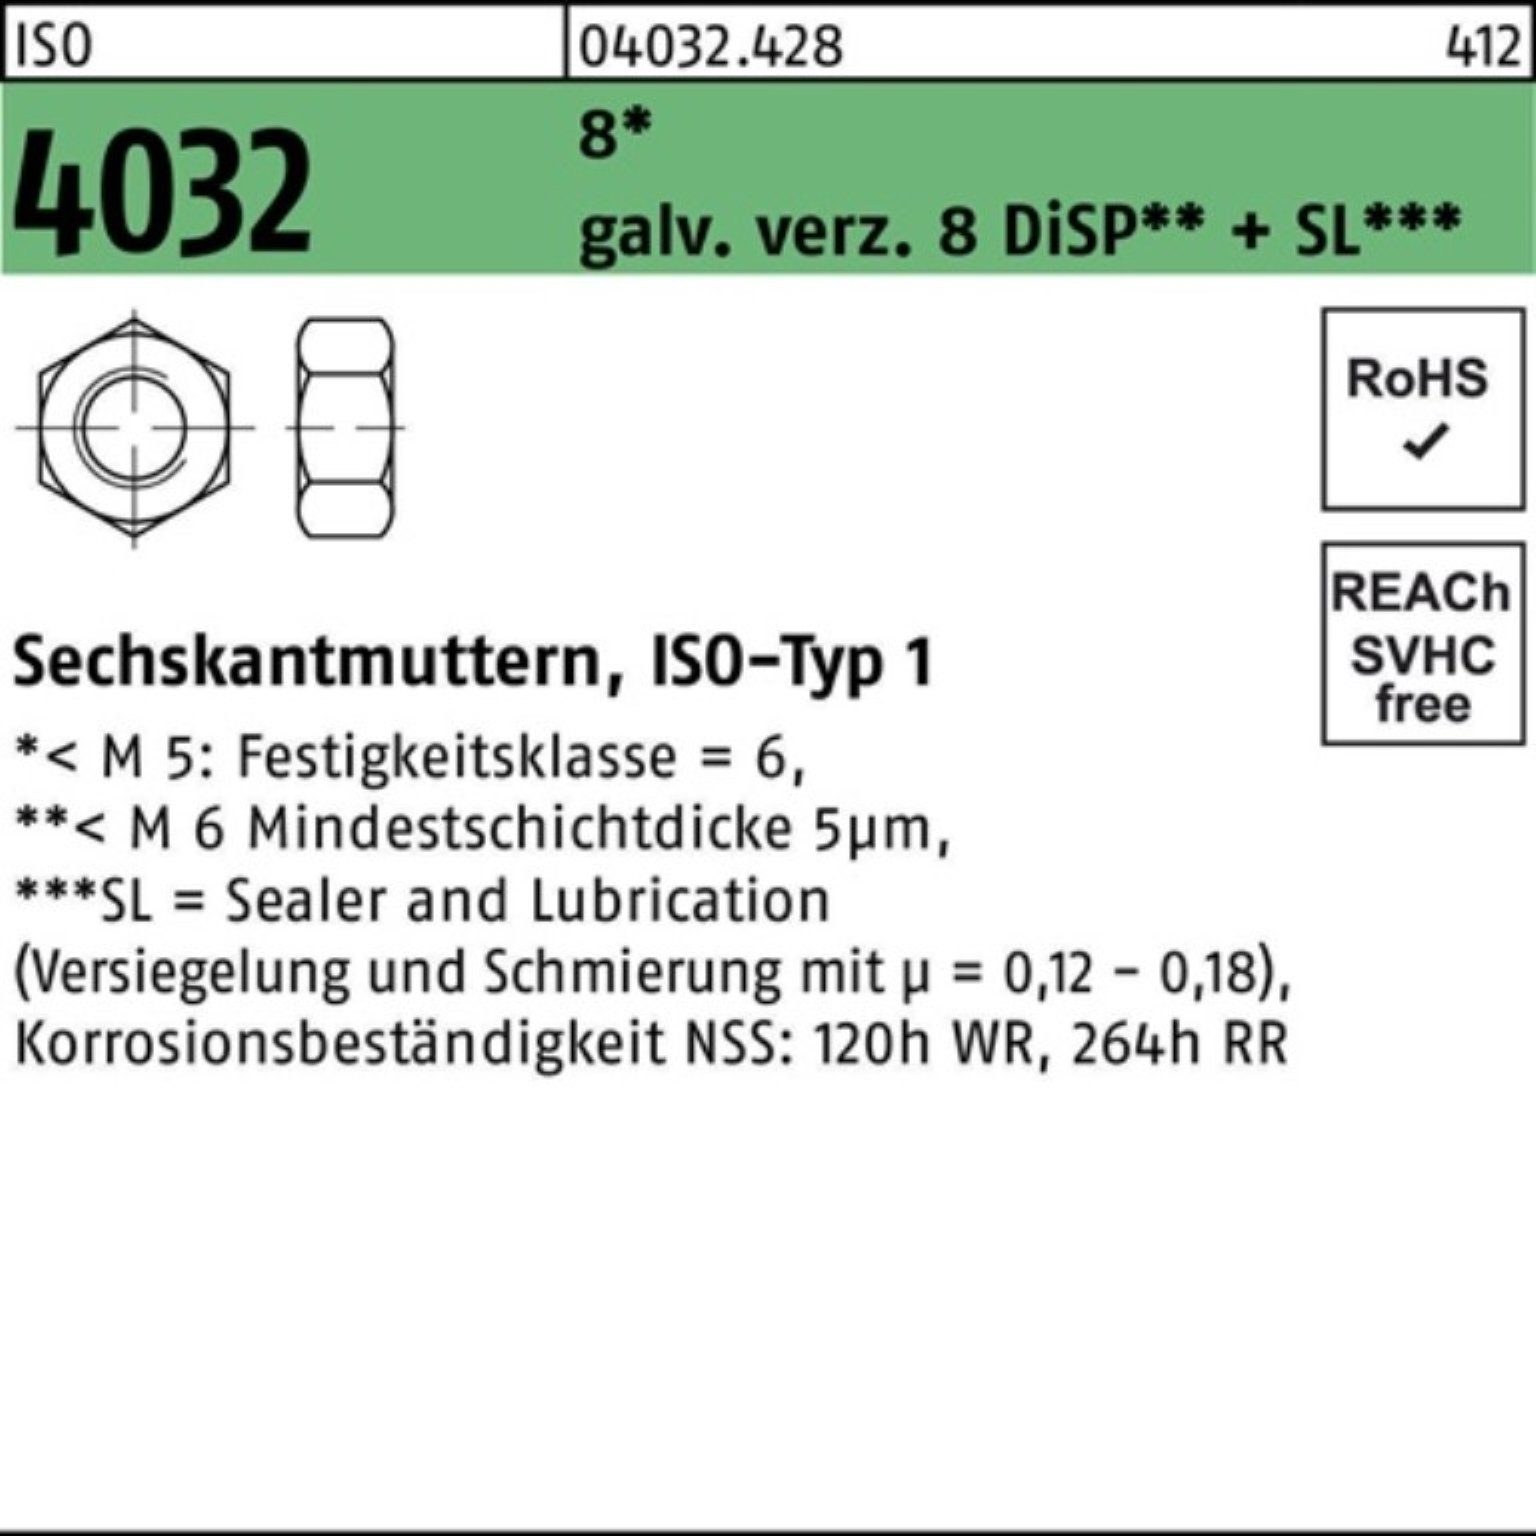 Bufab Muttern ISO 8 SL M4 4032 Sechskantmutter DiSP + 1000 1000er 8 galv.verz. Pack